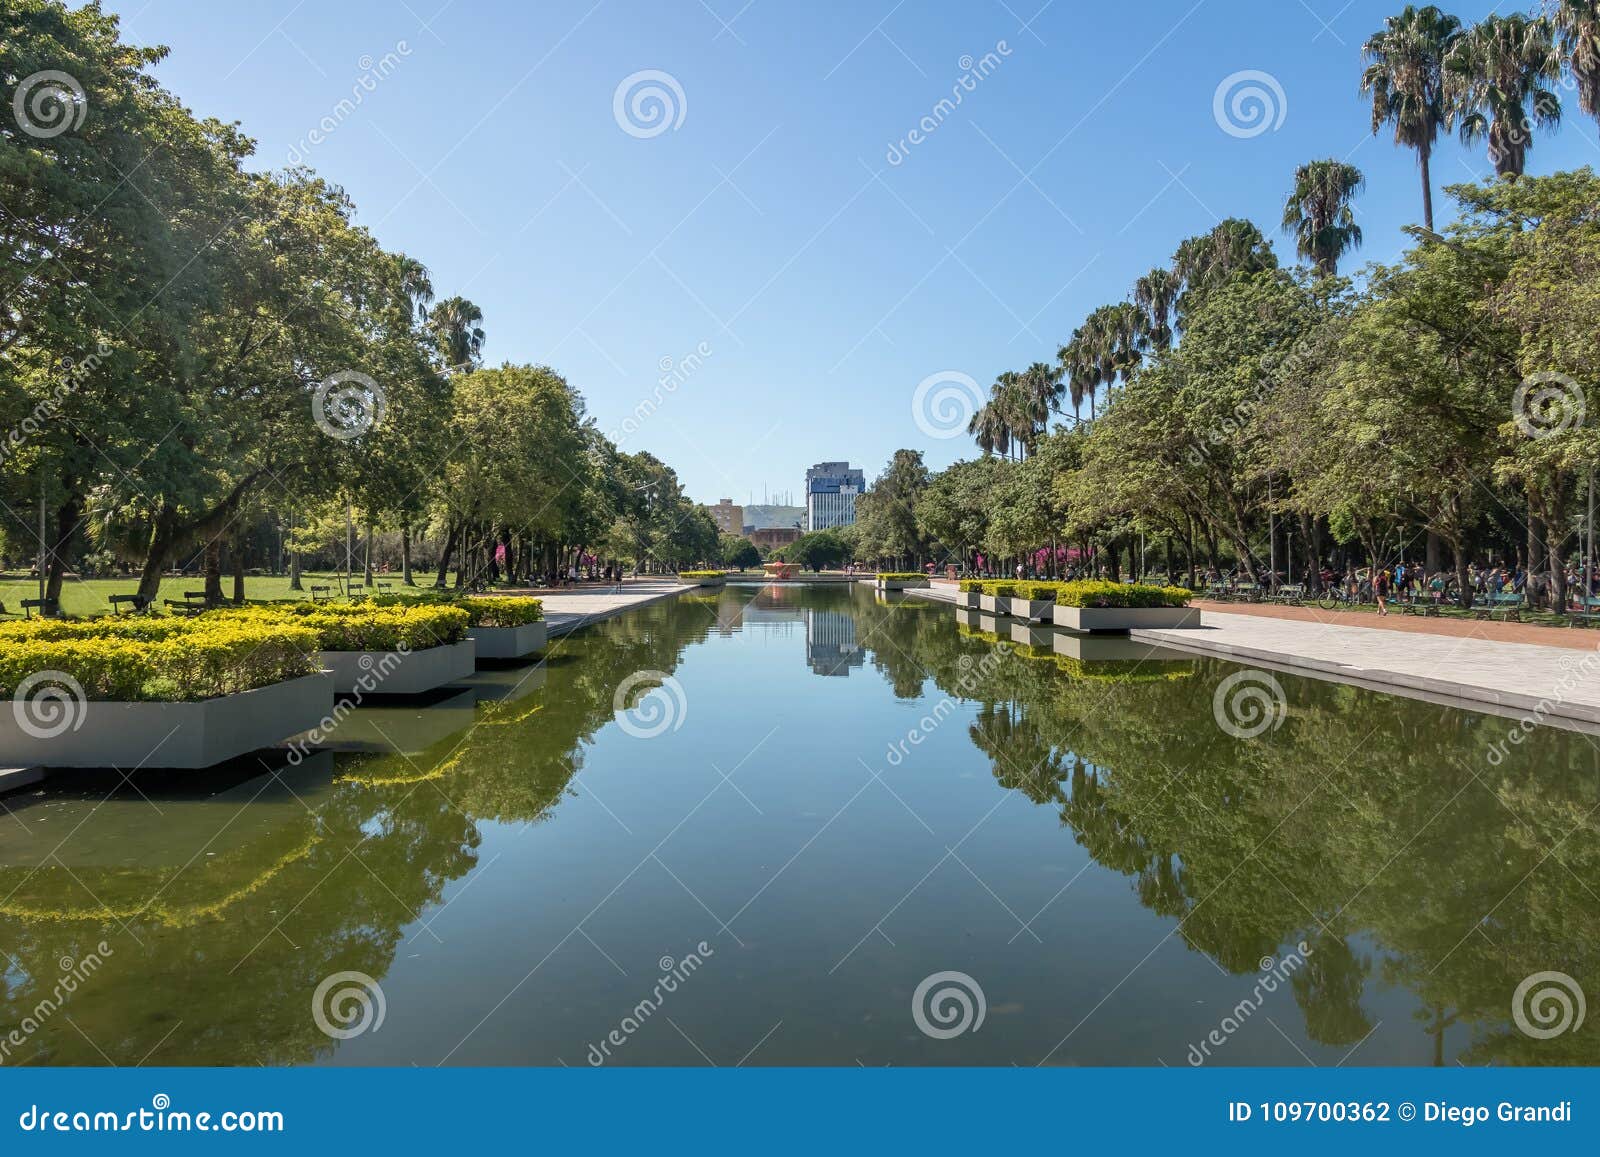 farroupilha park or redencao park reflecting pool in porto alegre, rio grande do sul, brazil